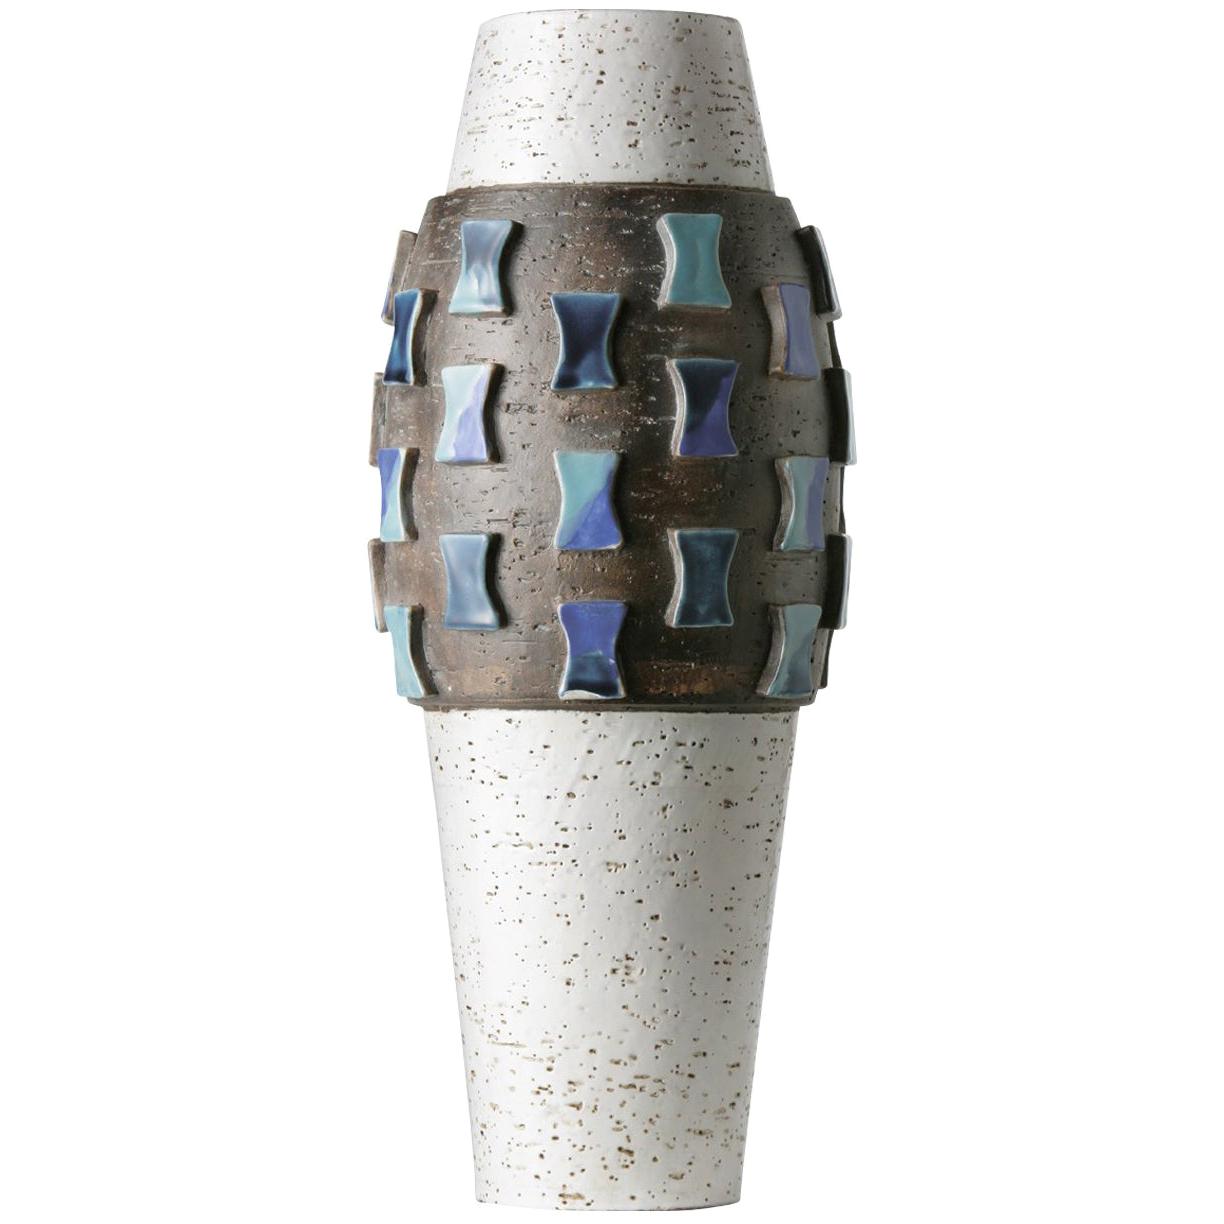 Vase mit Kacheln von Aldo Londi